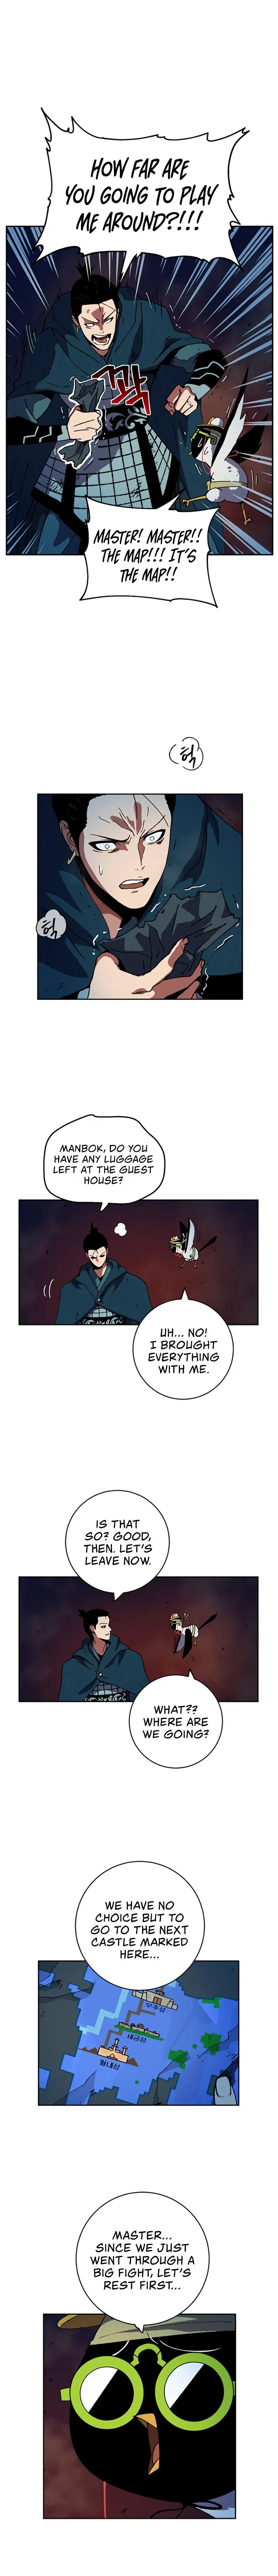 Taebaek: The Tutorial Man Chapter 2 page 24